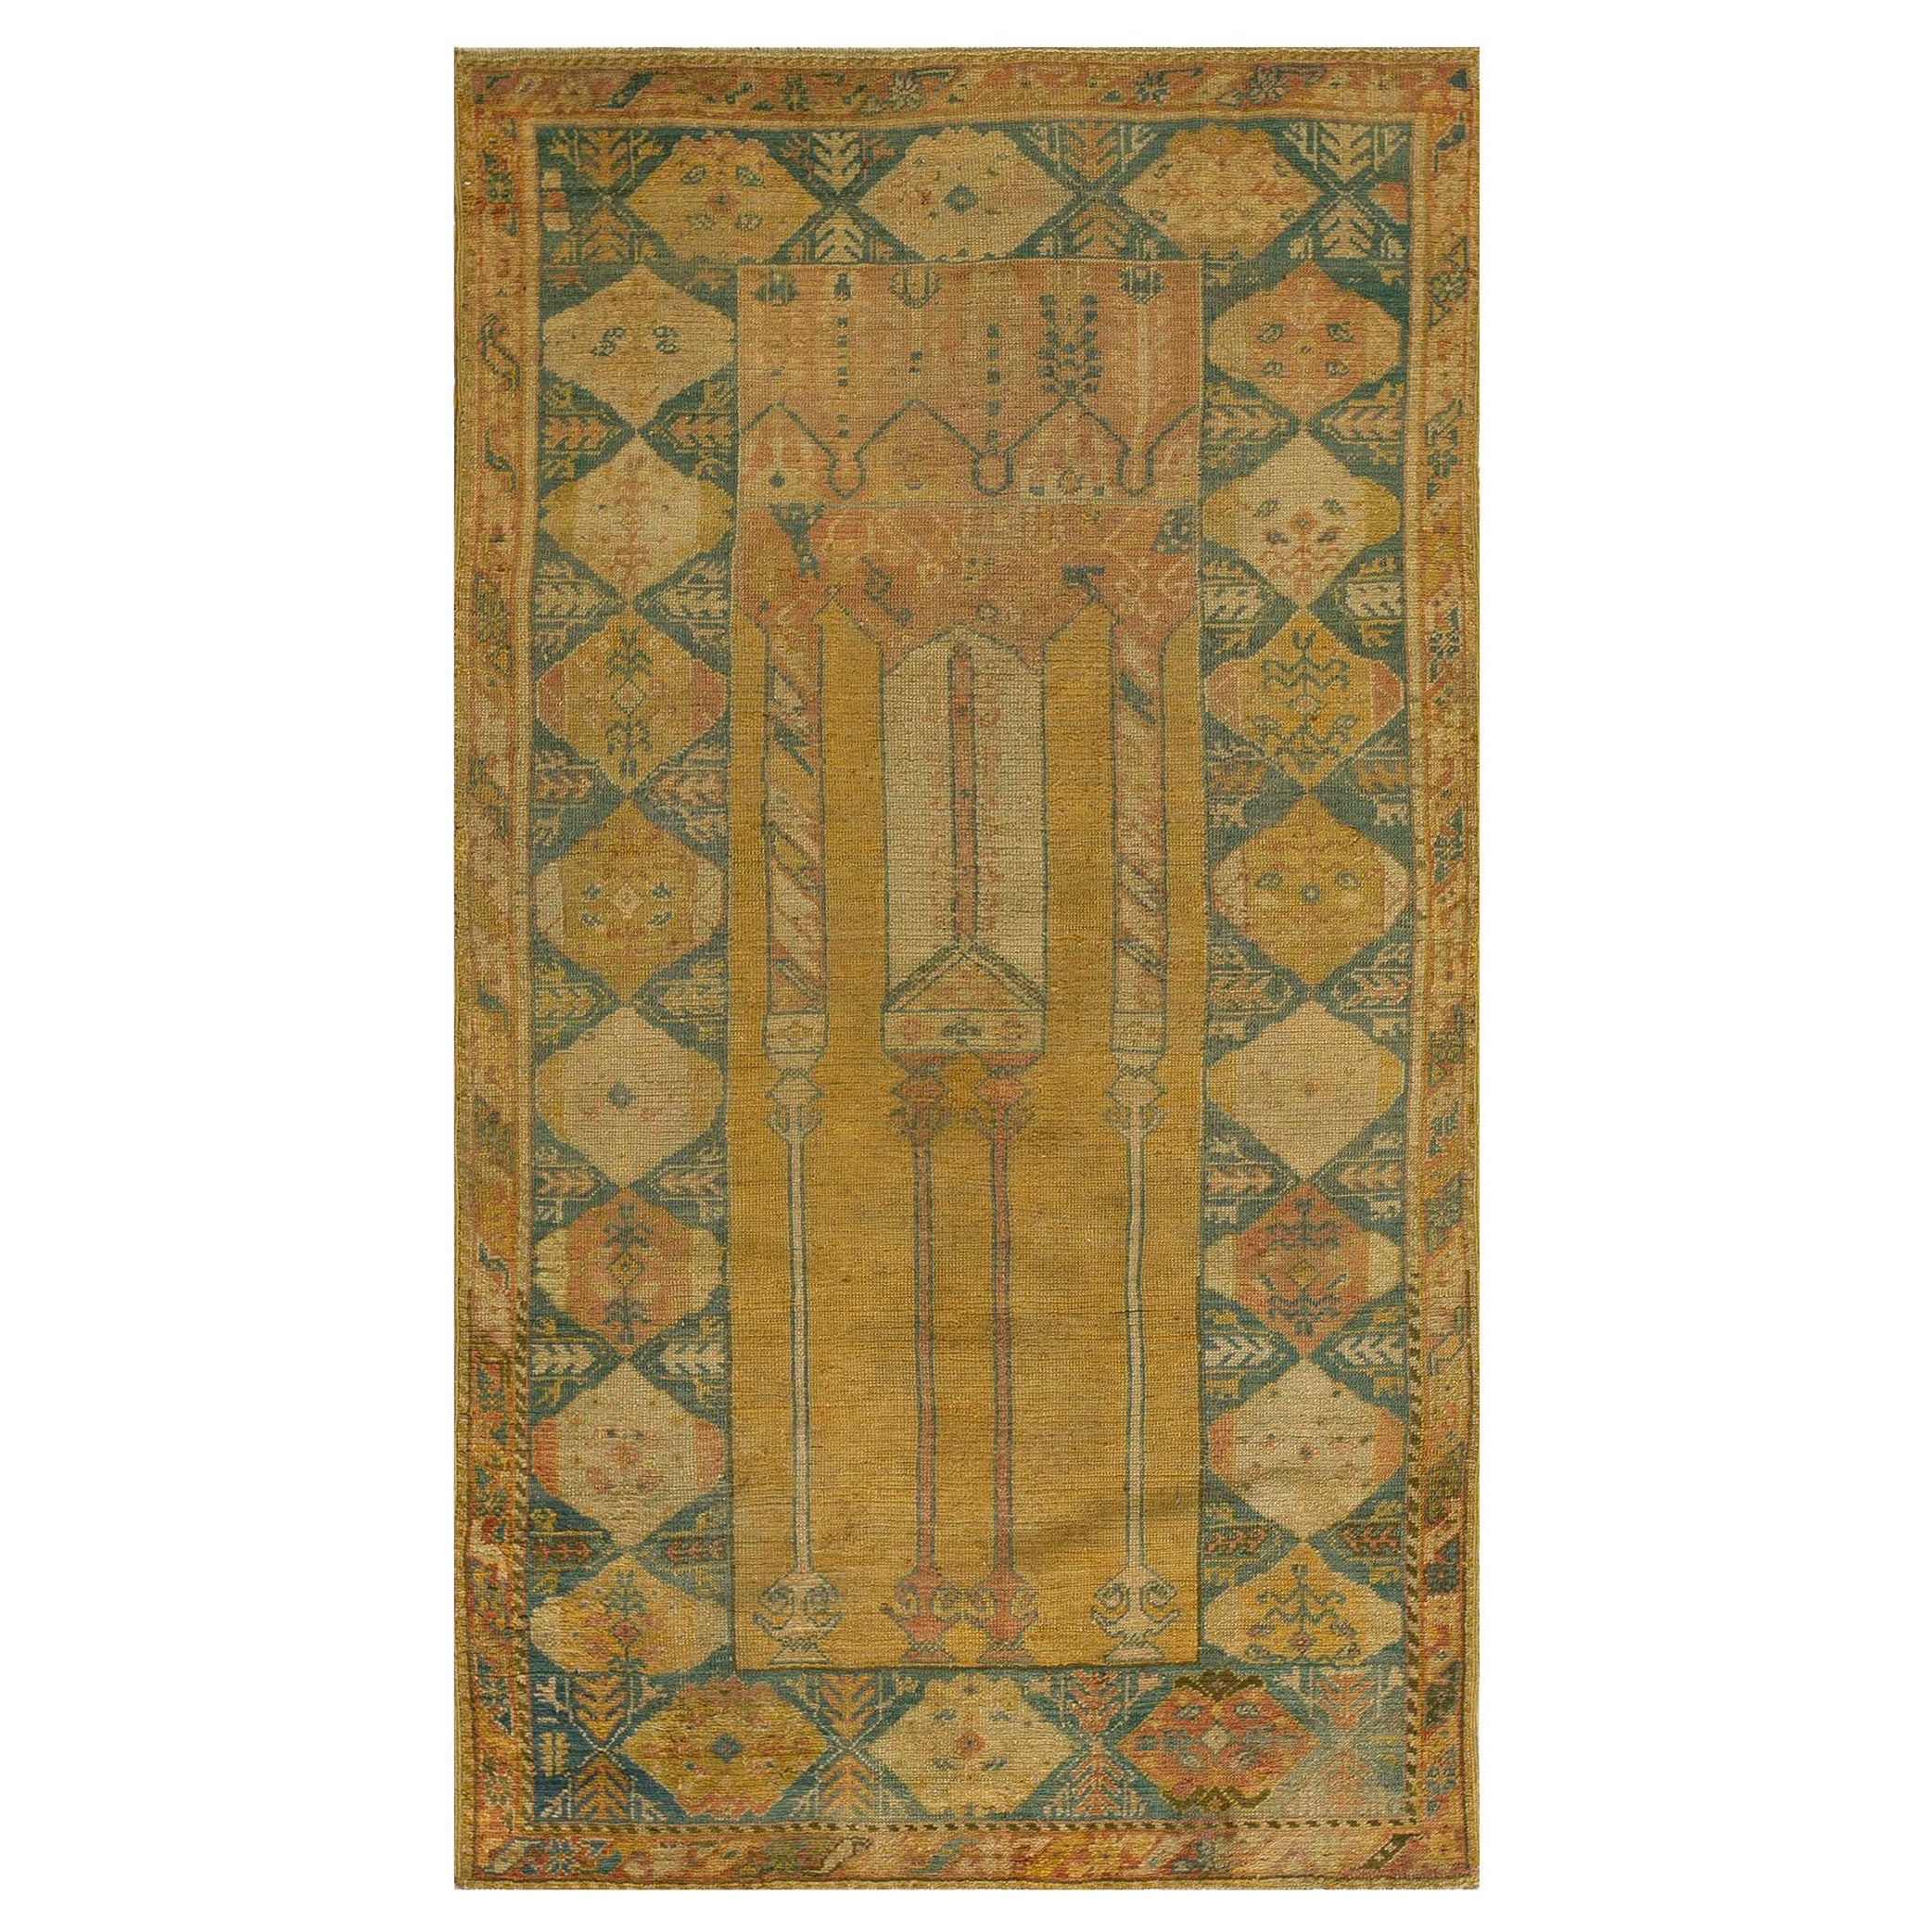 Antique Turkish Kula Prayer Rug  (3' 3" x 6' - 98 x 183 cm )